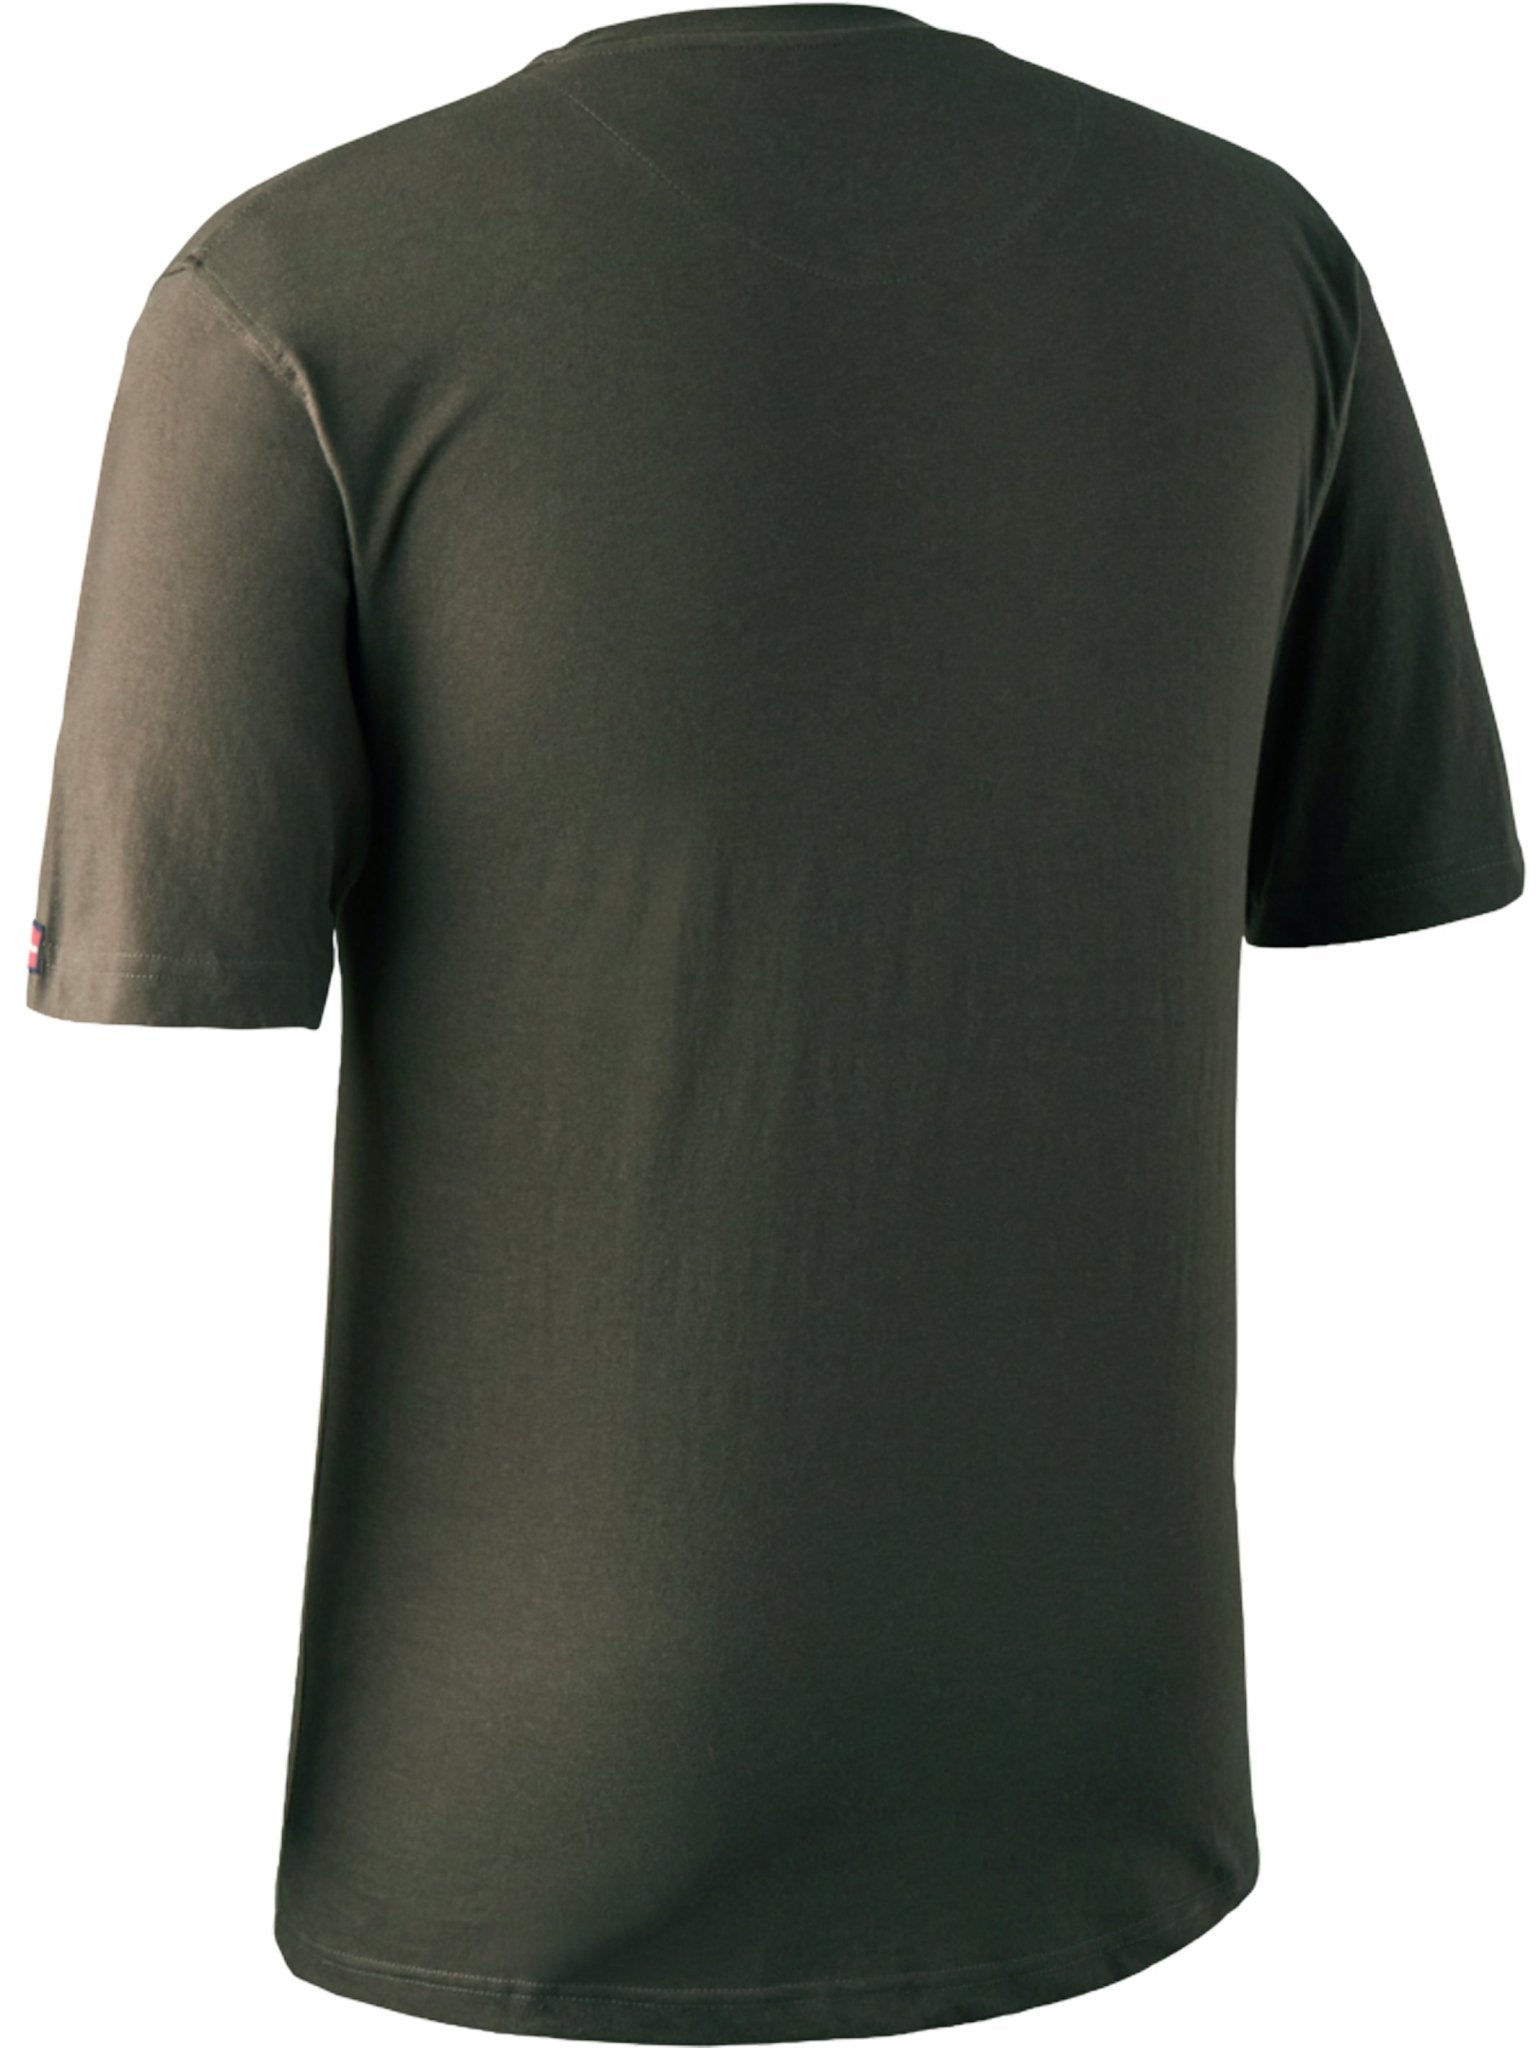 4elementsclothingDeerhunterDeerhunter - Shield Logo mens tee / t-shirt - Mens Deerhunter logo t-shirtT-Shirt8848/378/S